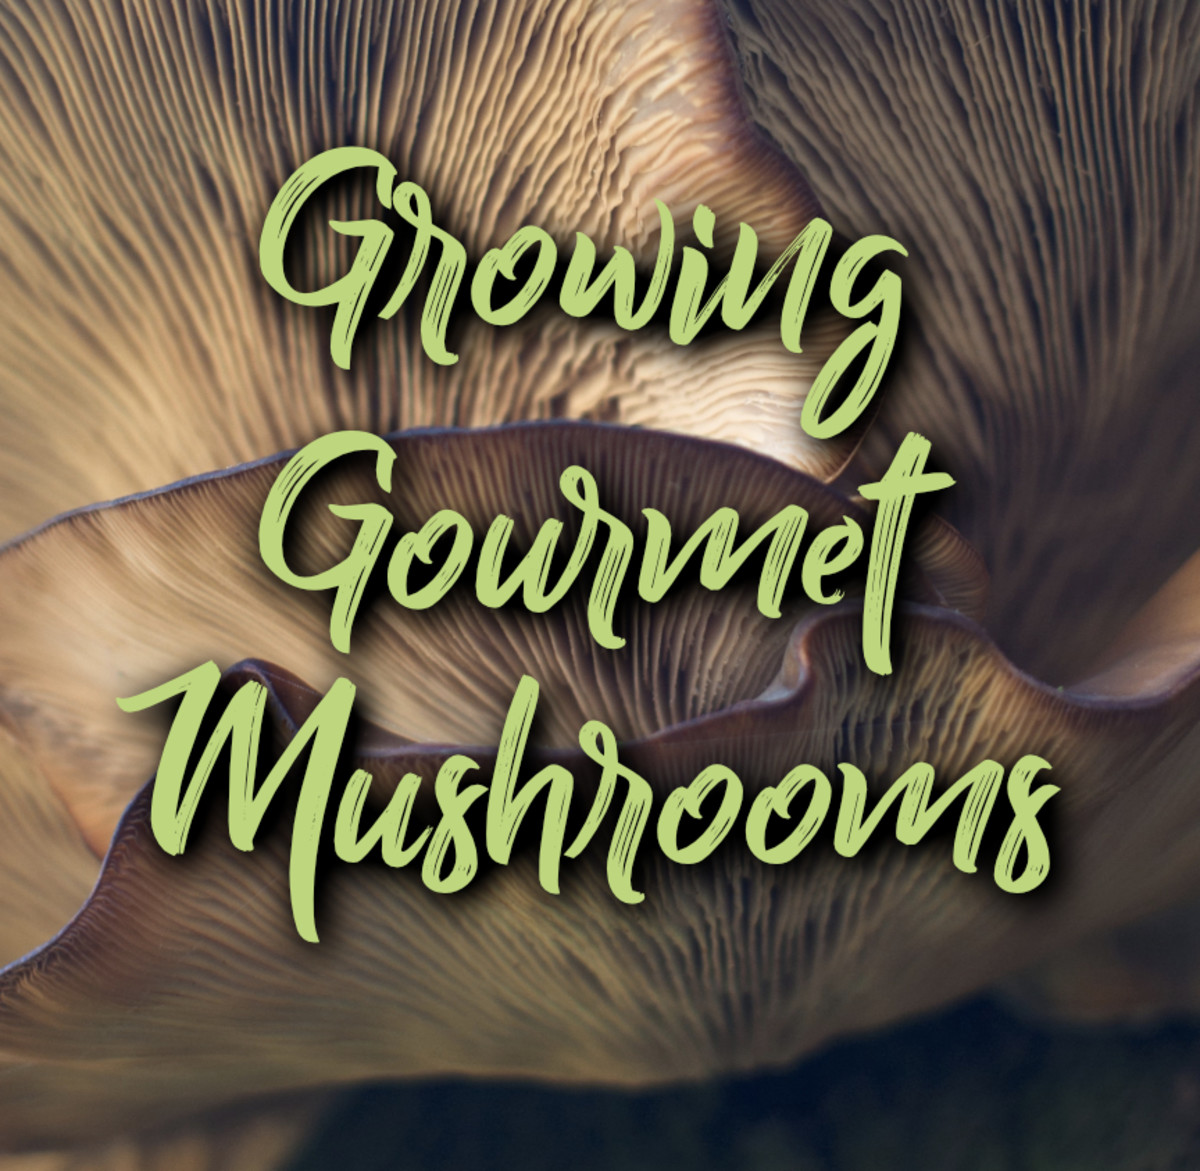 Learn how to grow gourmet mushrooms in hardwood, step-by-step.